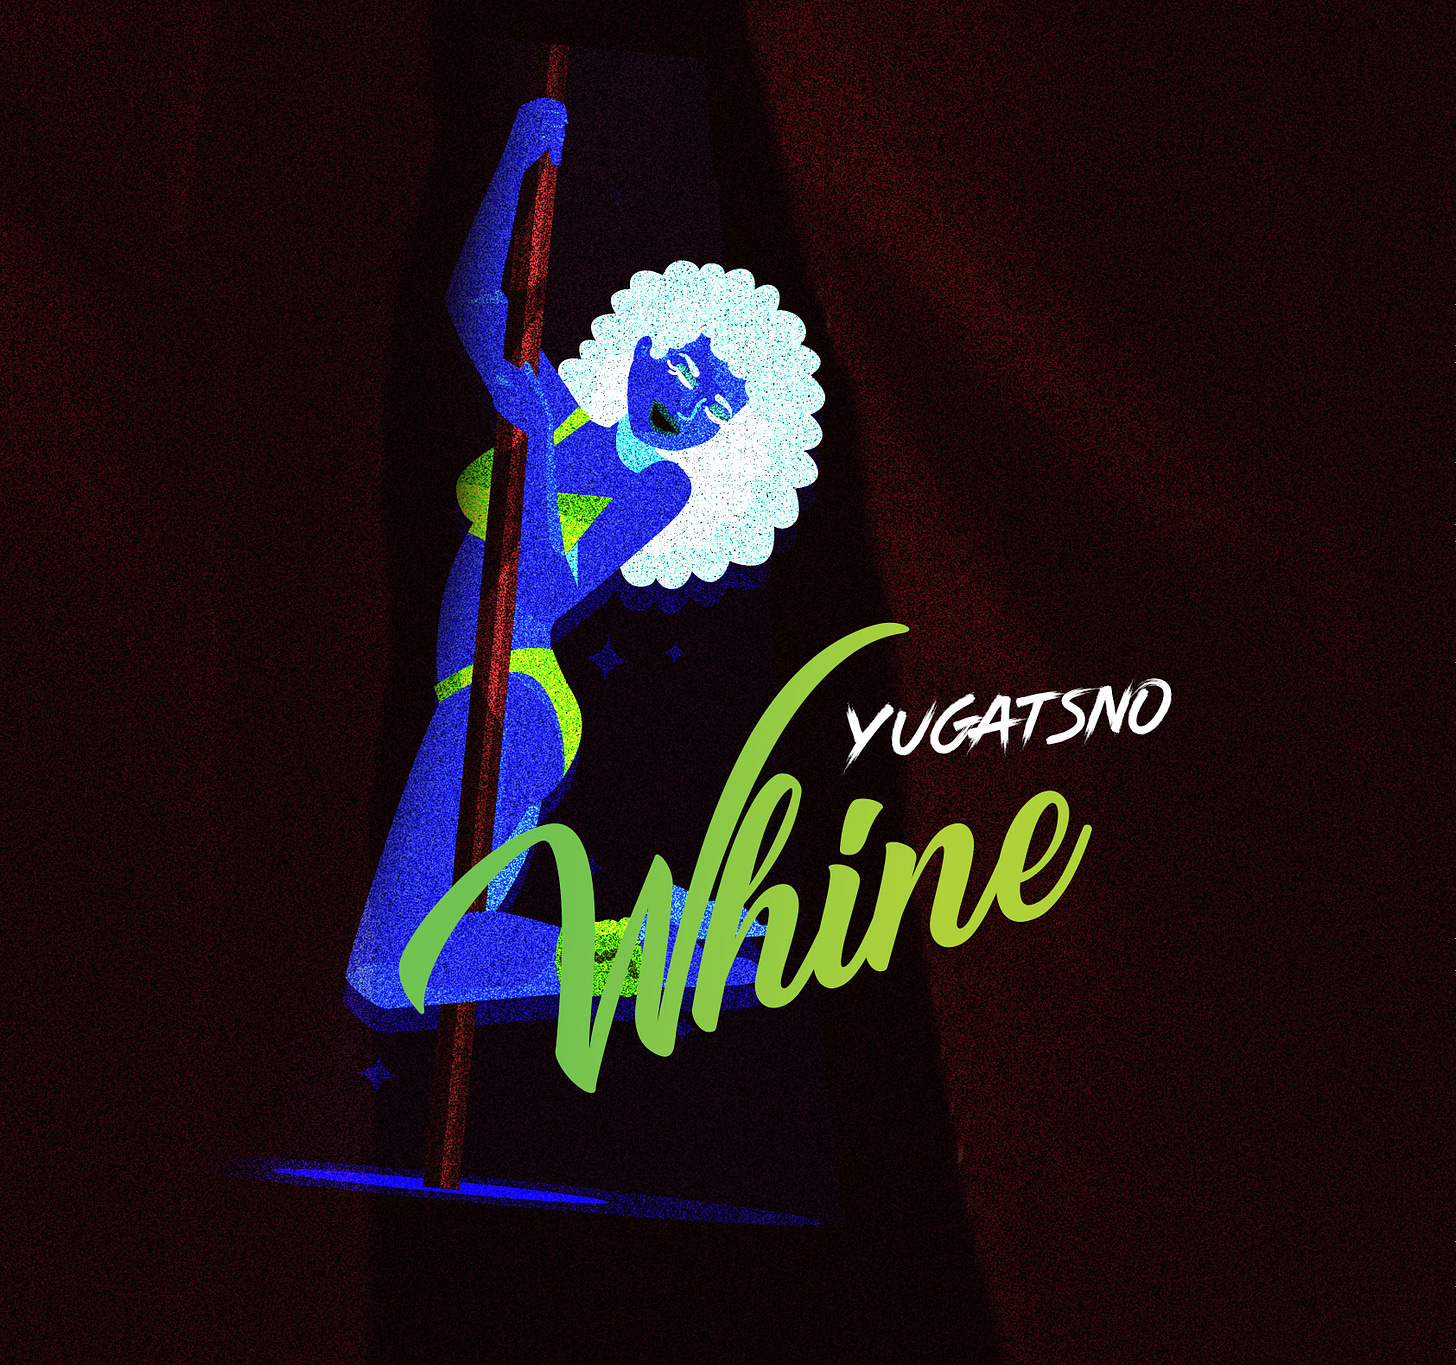 Yugatsno's latest single, Whine